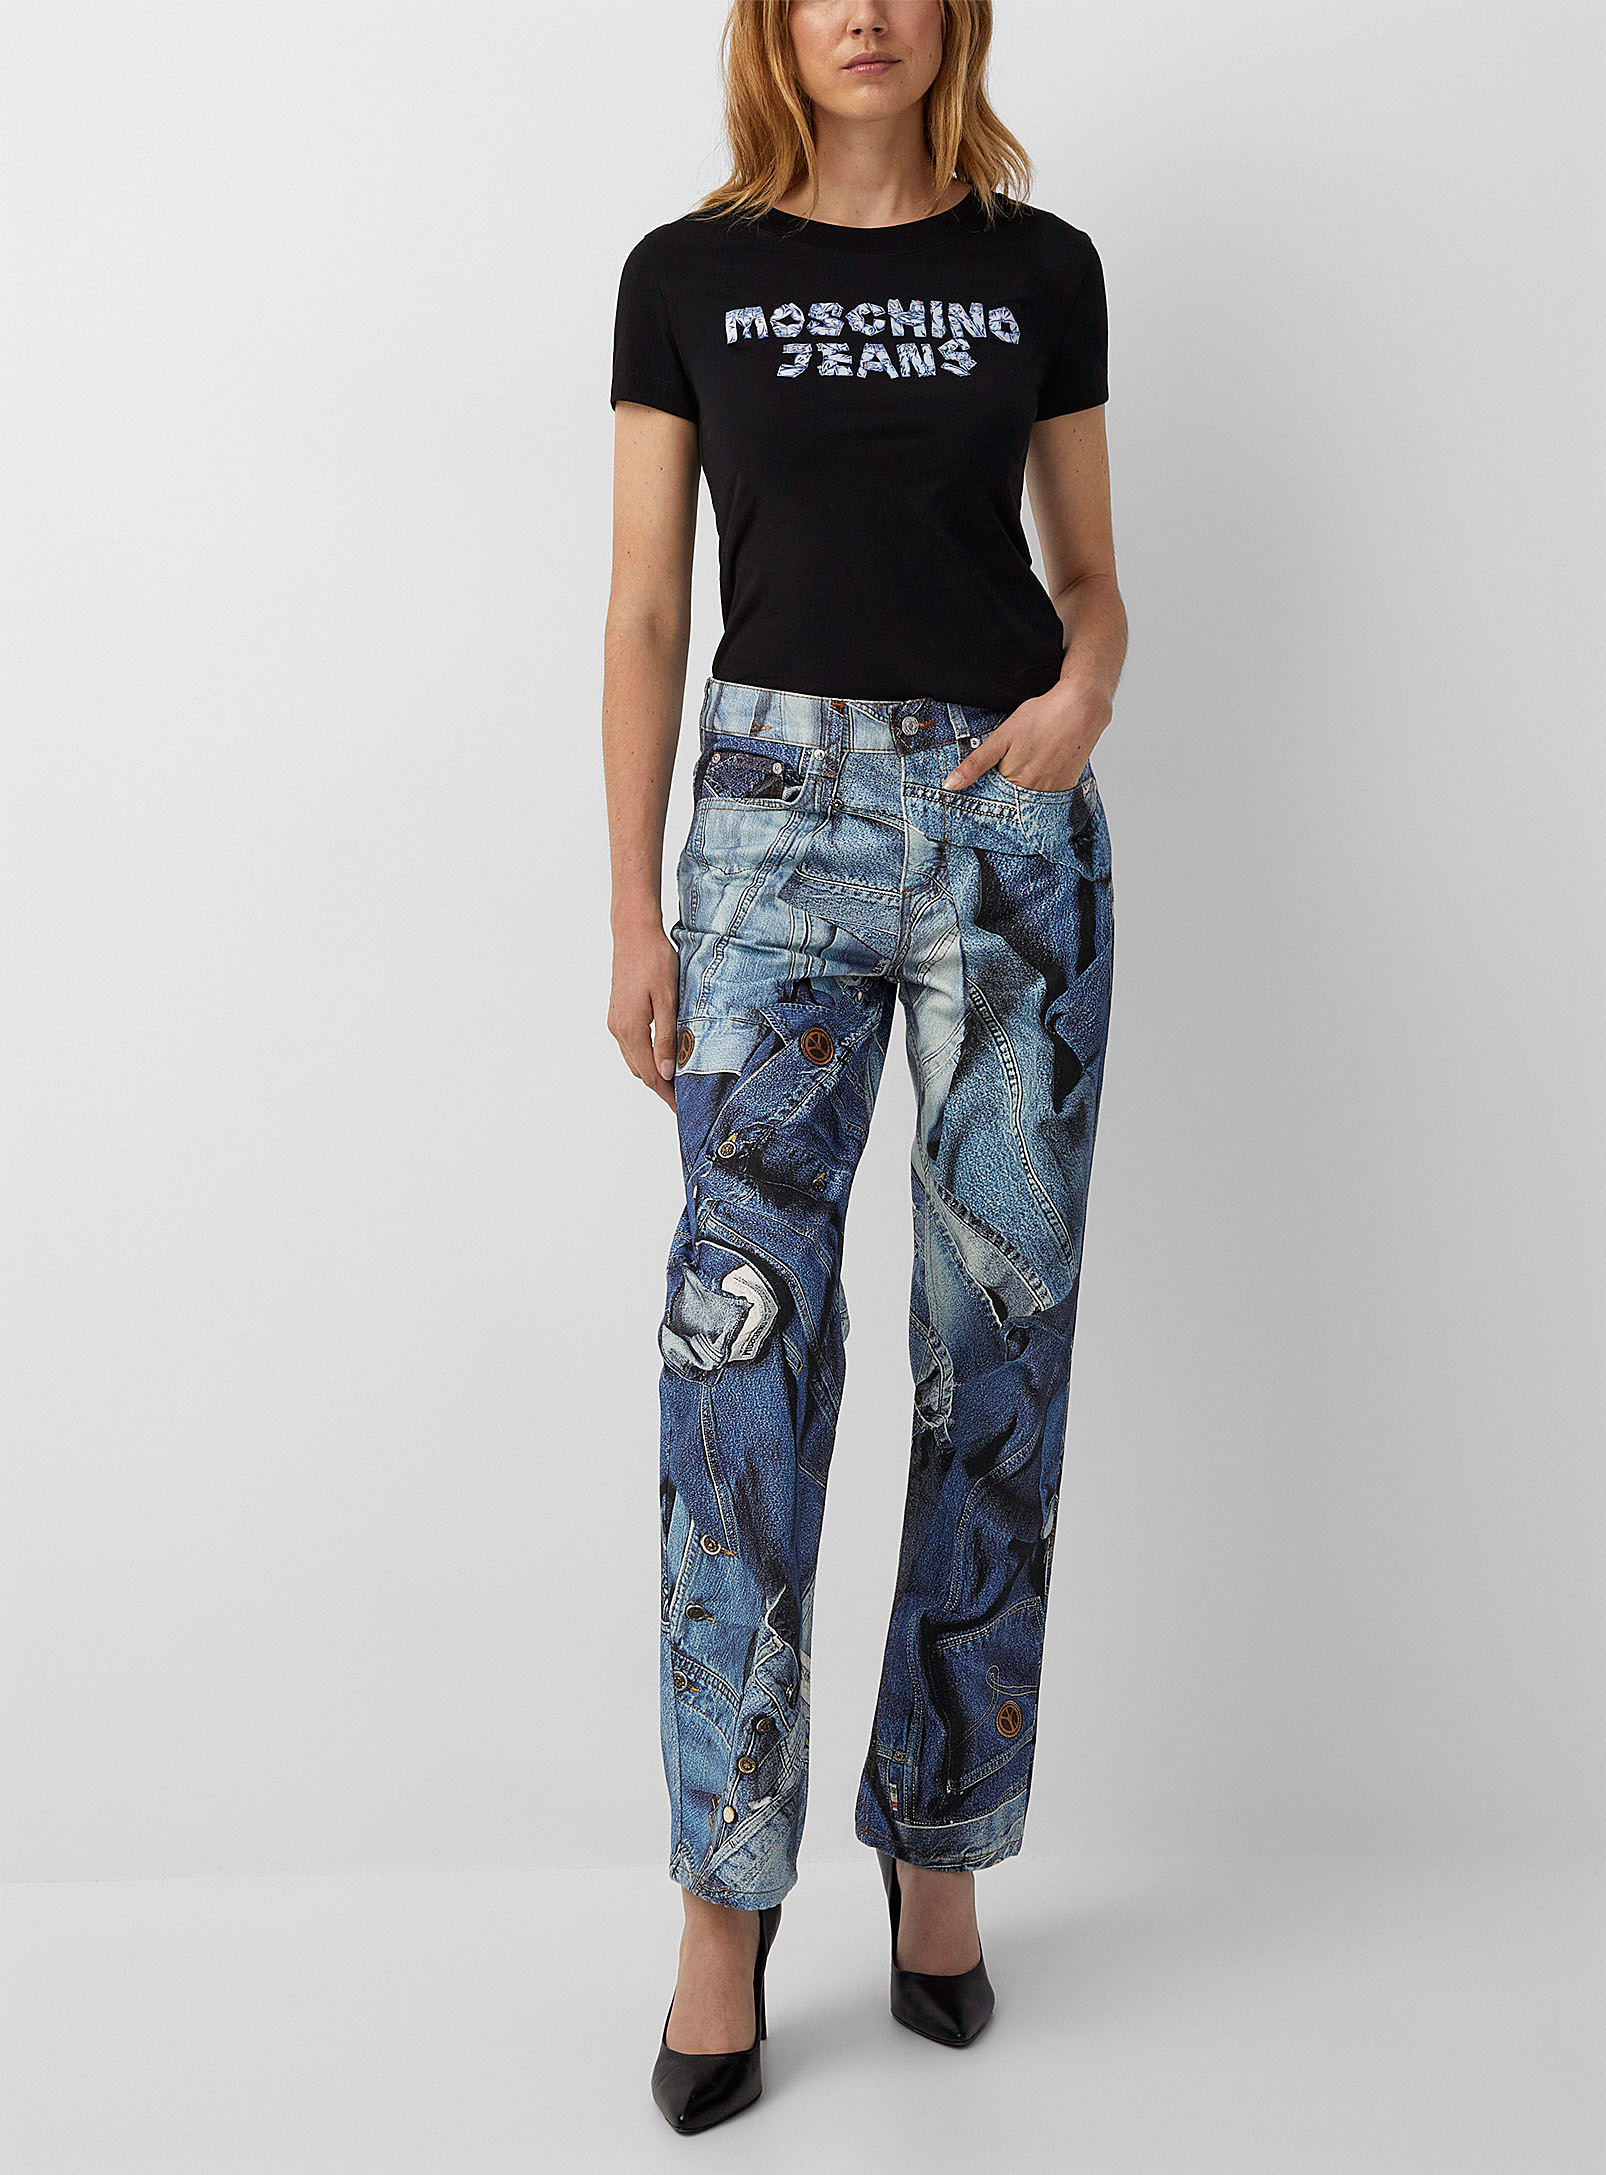 Moschino Jeans - Women's Collage effect denim jean